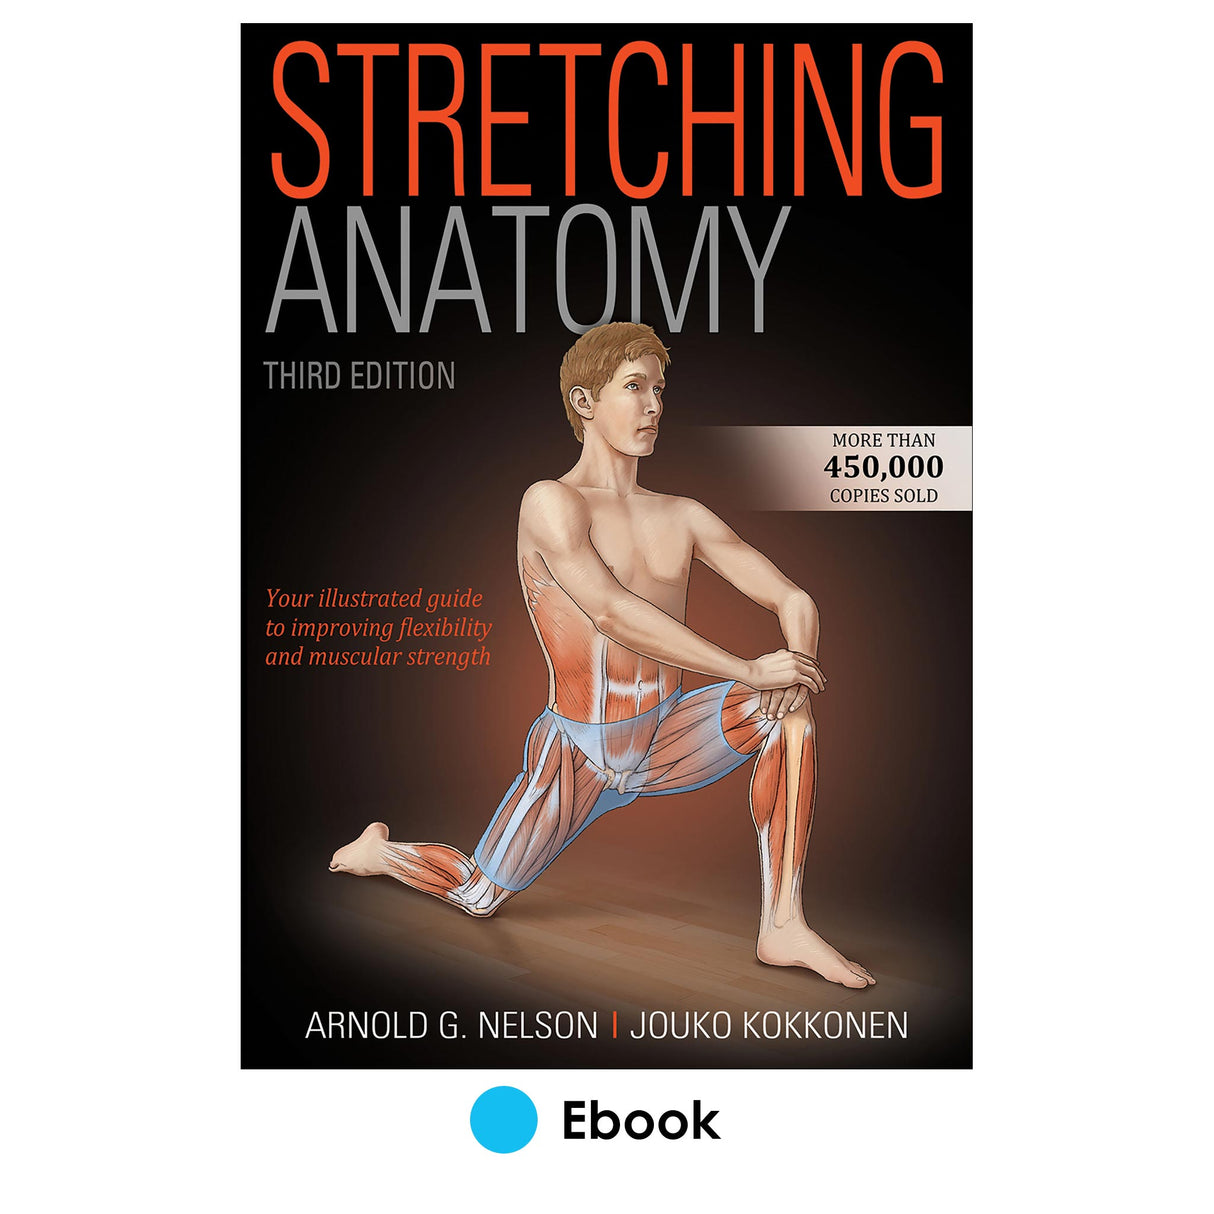 Stretching Anatomy 3rd Edition epub